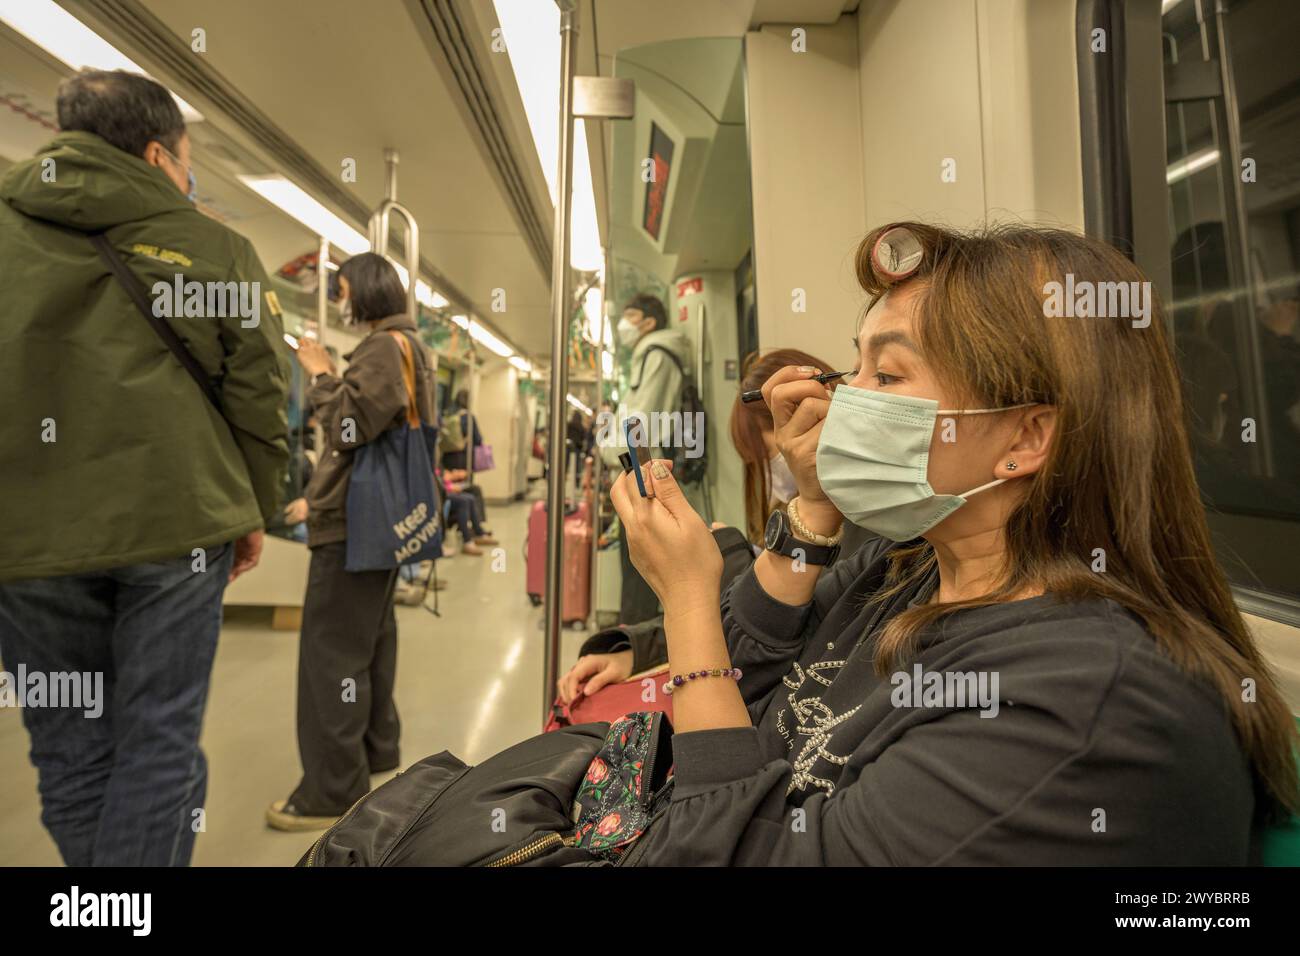 Woman putting on eye makeup during a long subway ride Stock Photo